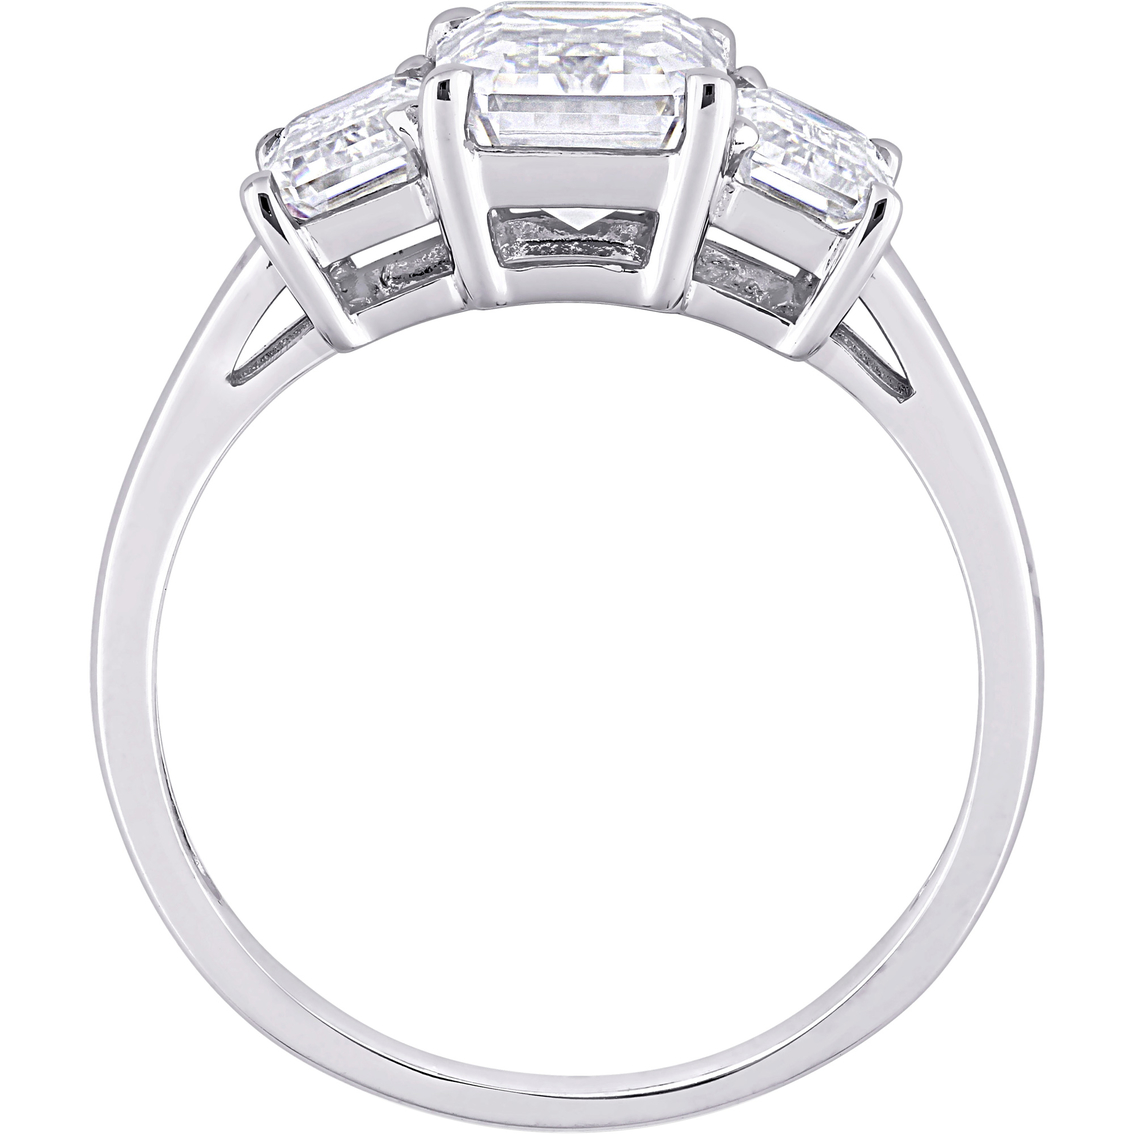 Sofia B. 10K White Gold Lab Created Moissanite Emerald Cut 3 Stone Engagement Ring - Image 2 of 4